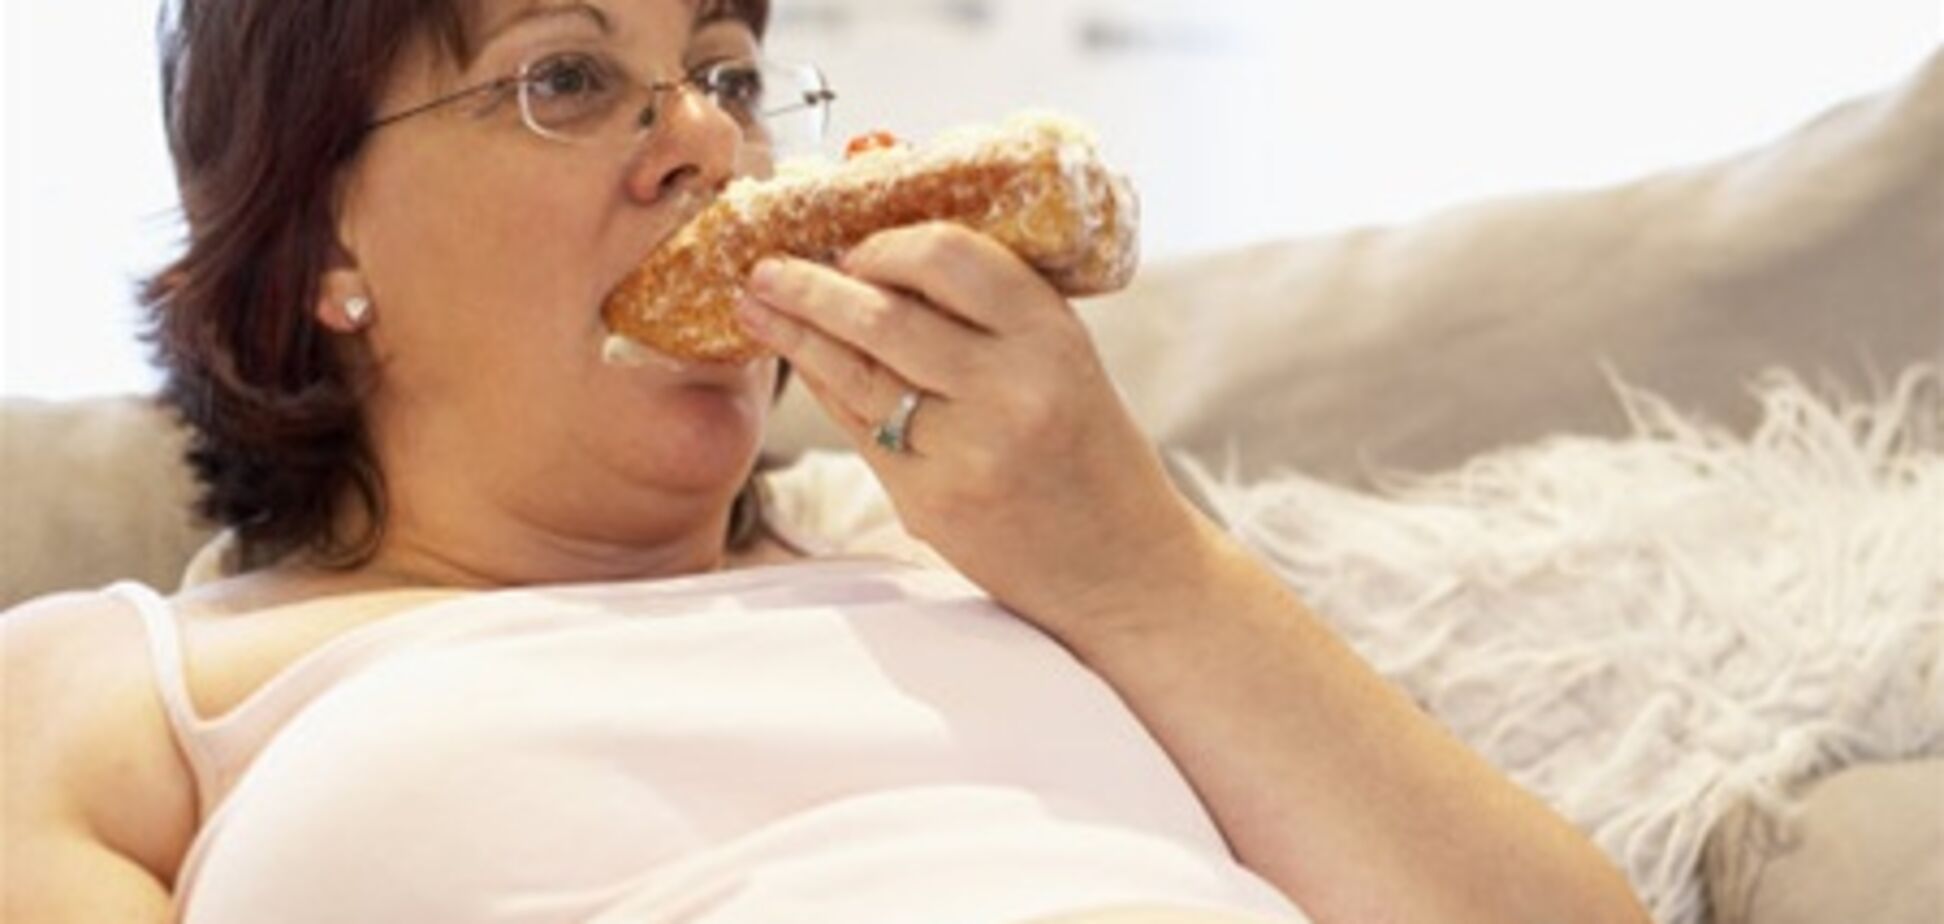 Лишний жир на животе увеличивает риск рака